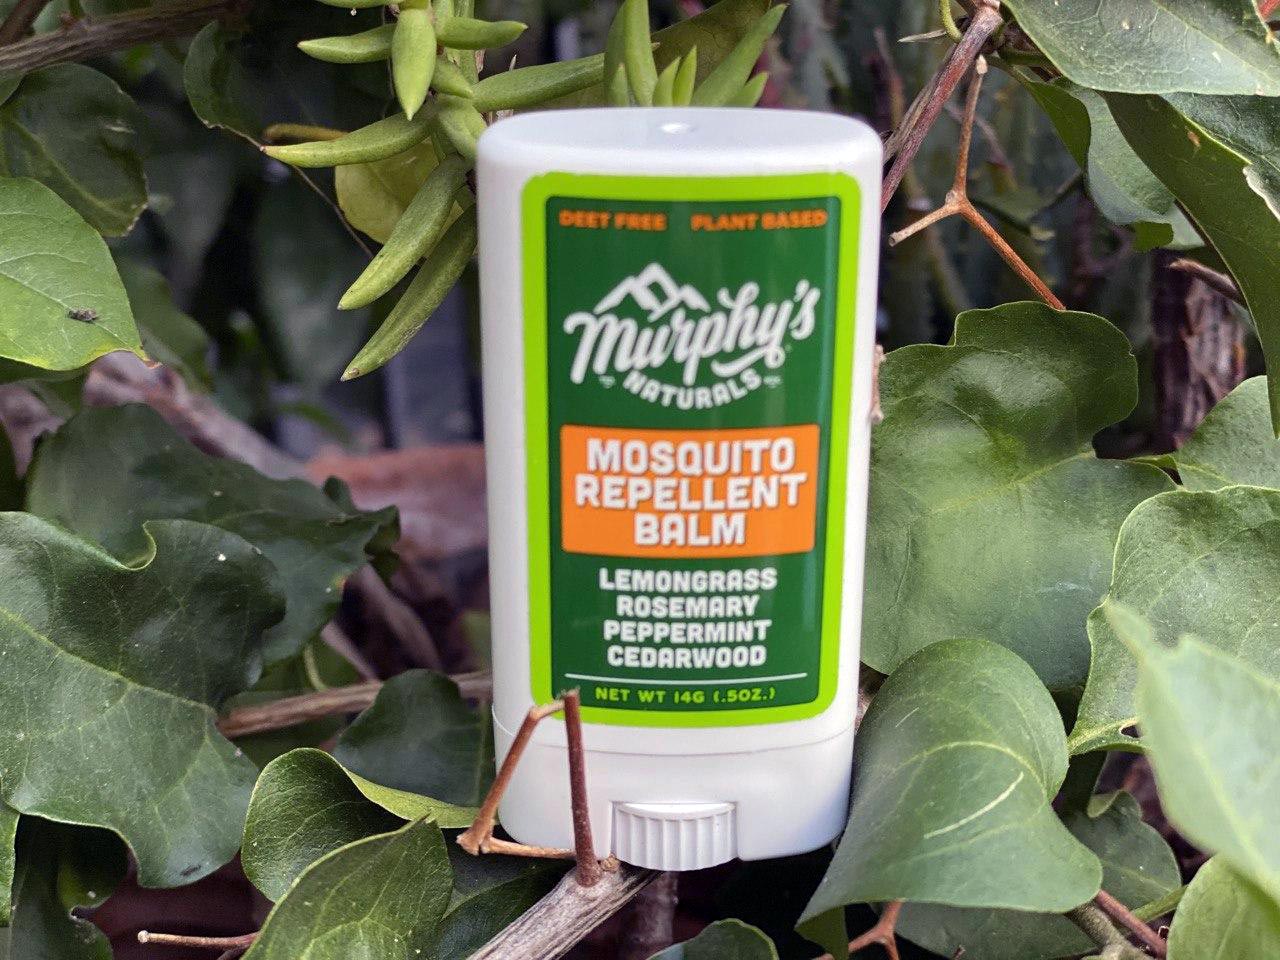 Battlbox Murphy’s Naturals Mosquito Repellent Balm